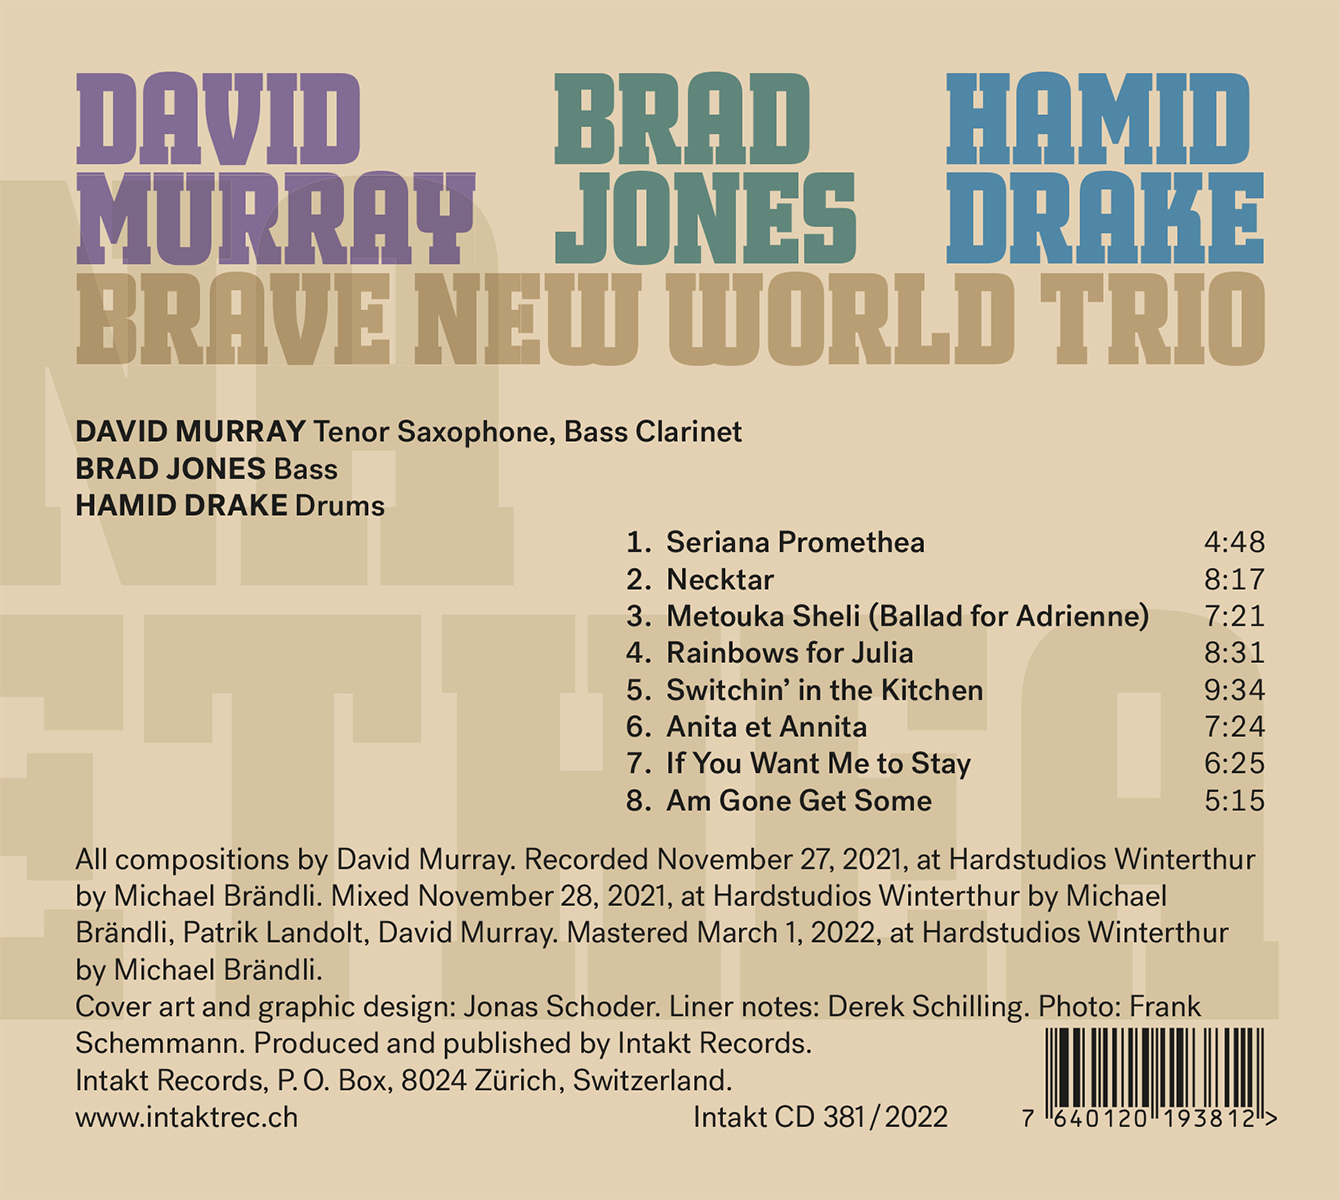 DAVID MURRAY BRAVE NEW WORLD TRIOwith BRAD JONES and HAMID DRAKE - SERIANA PROMETHEA. INTAKT CD 381 BACK COVER